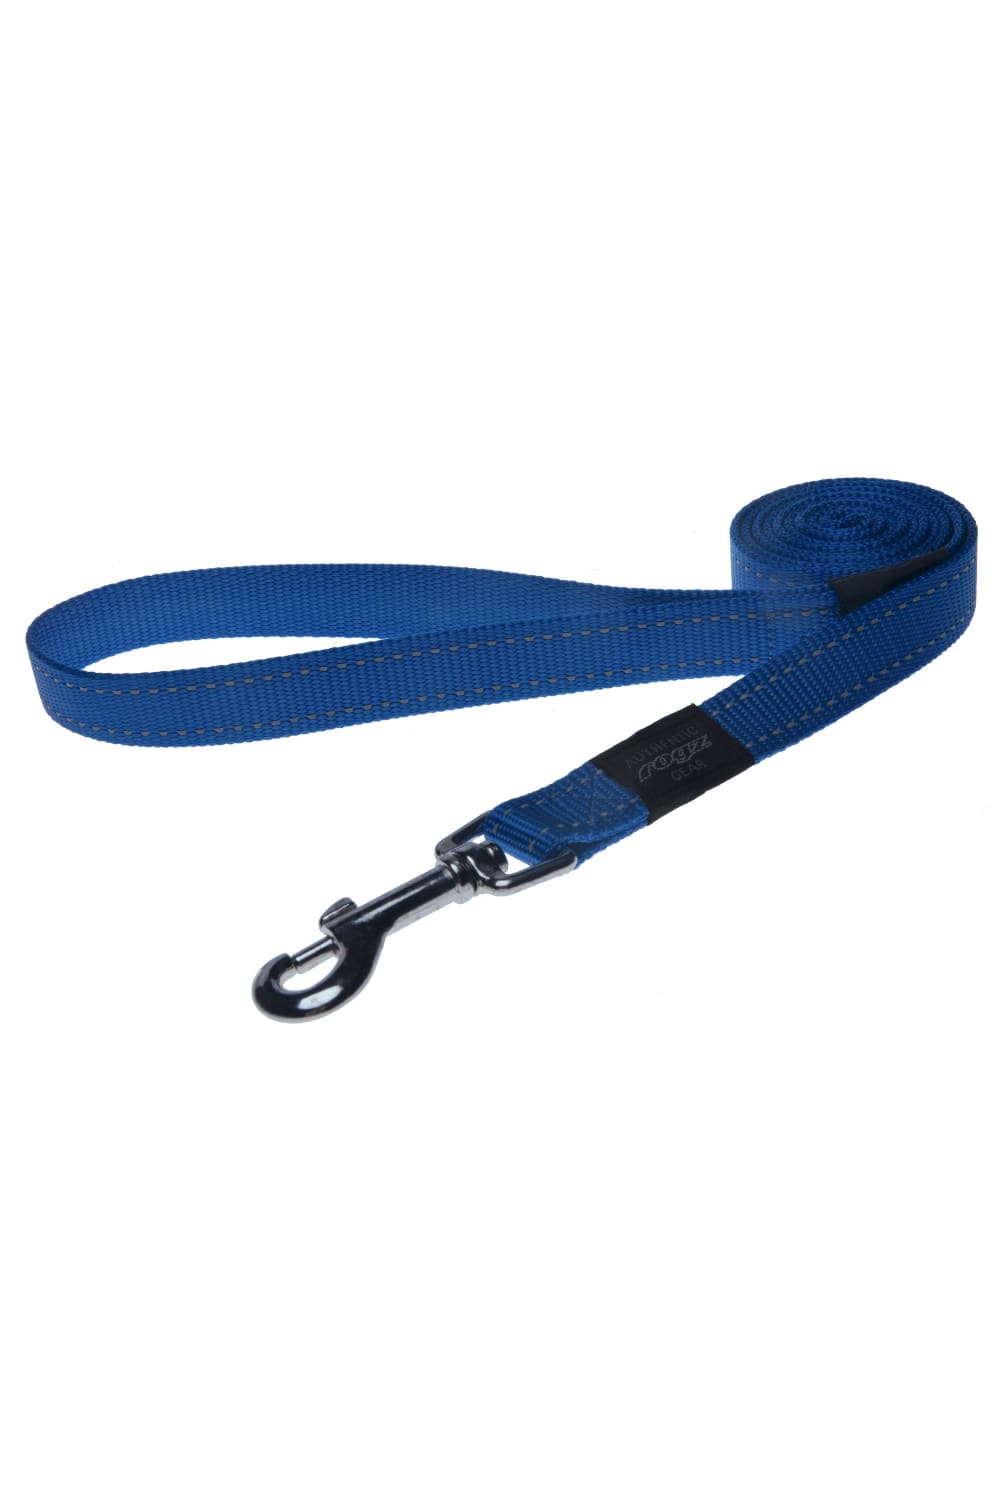 Rogz Utility Fixed Dog Lead (Blue) (47in x 1in)